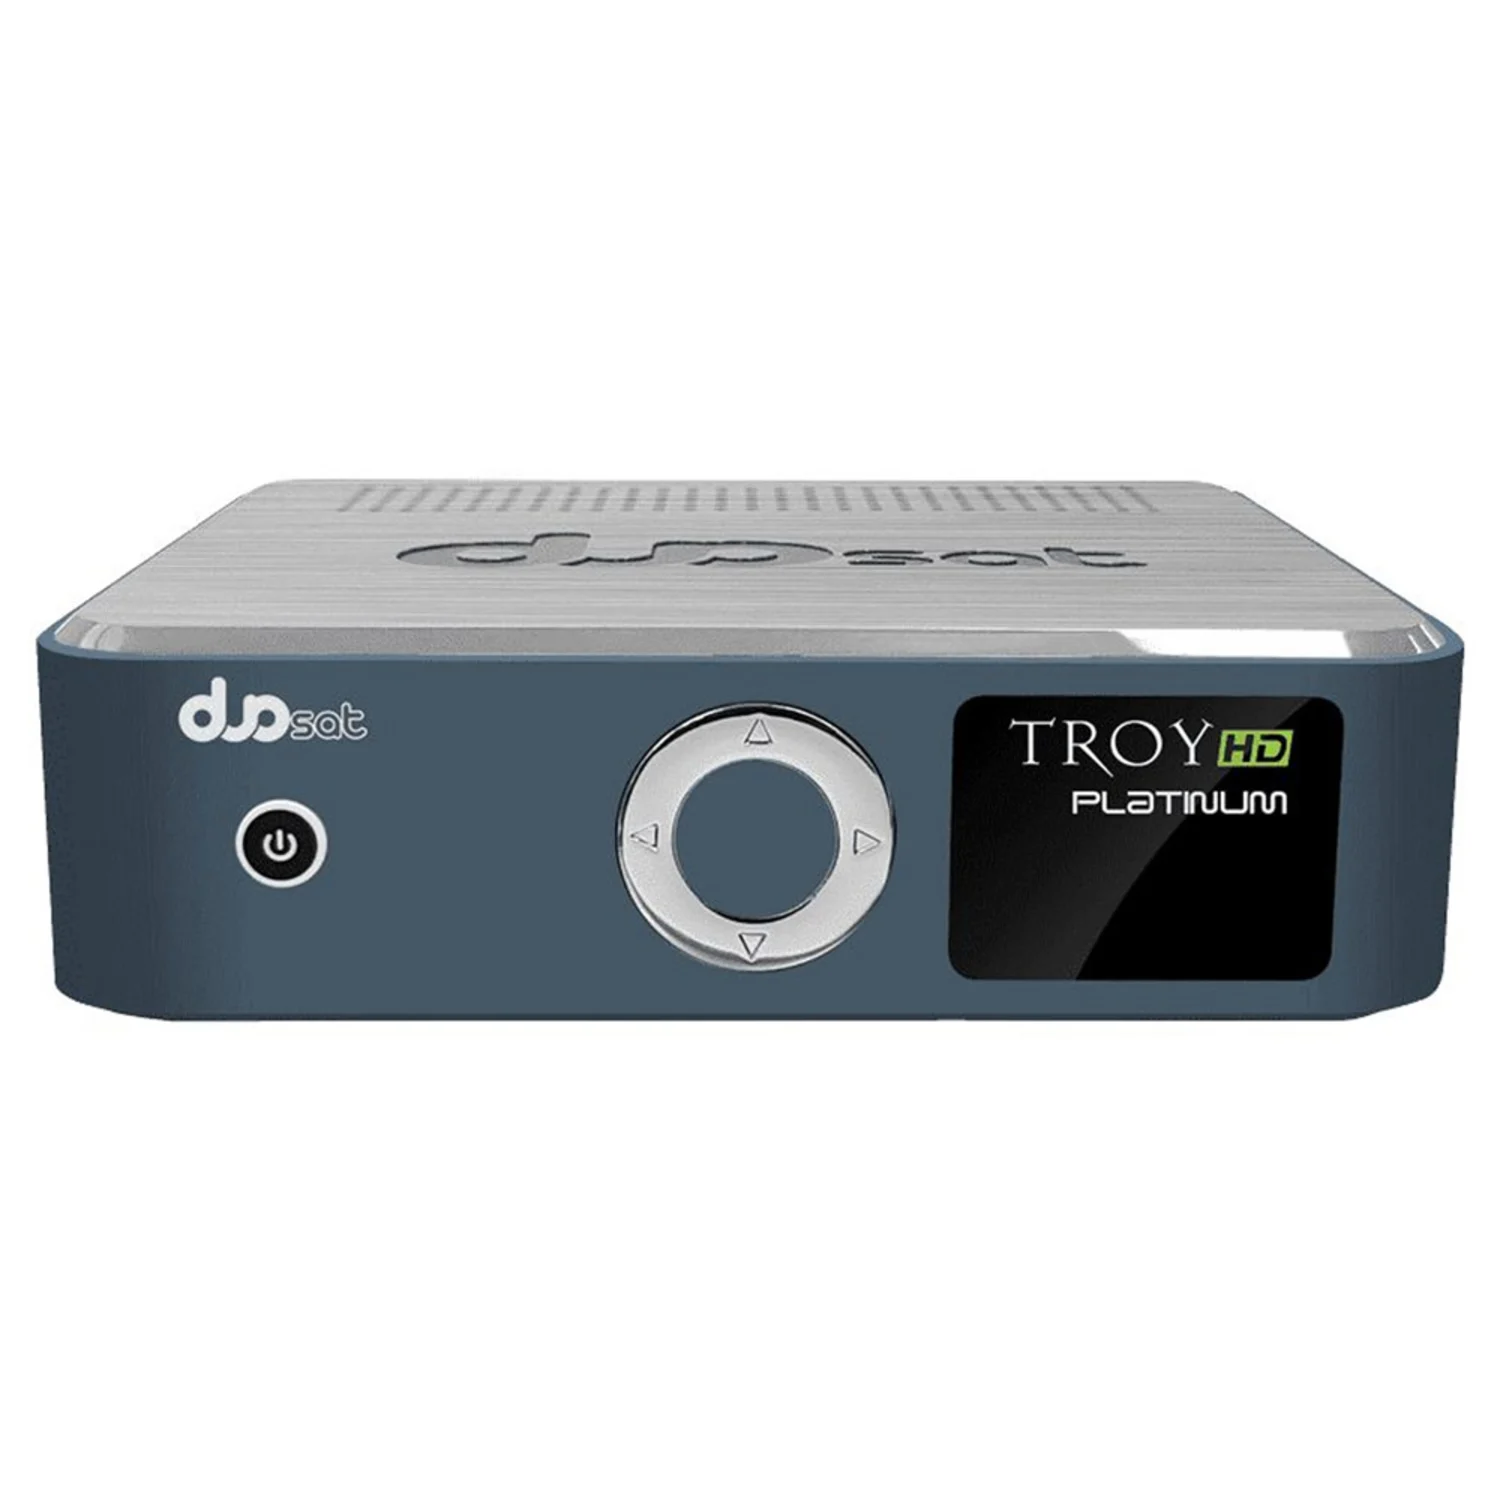 Receptor Duosat Troy Platinum Full HD 256MB RAM Wi-Fi - Cinza